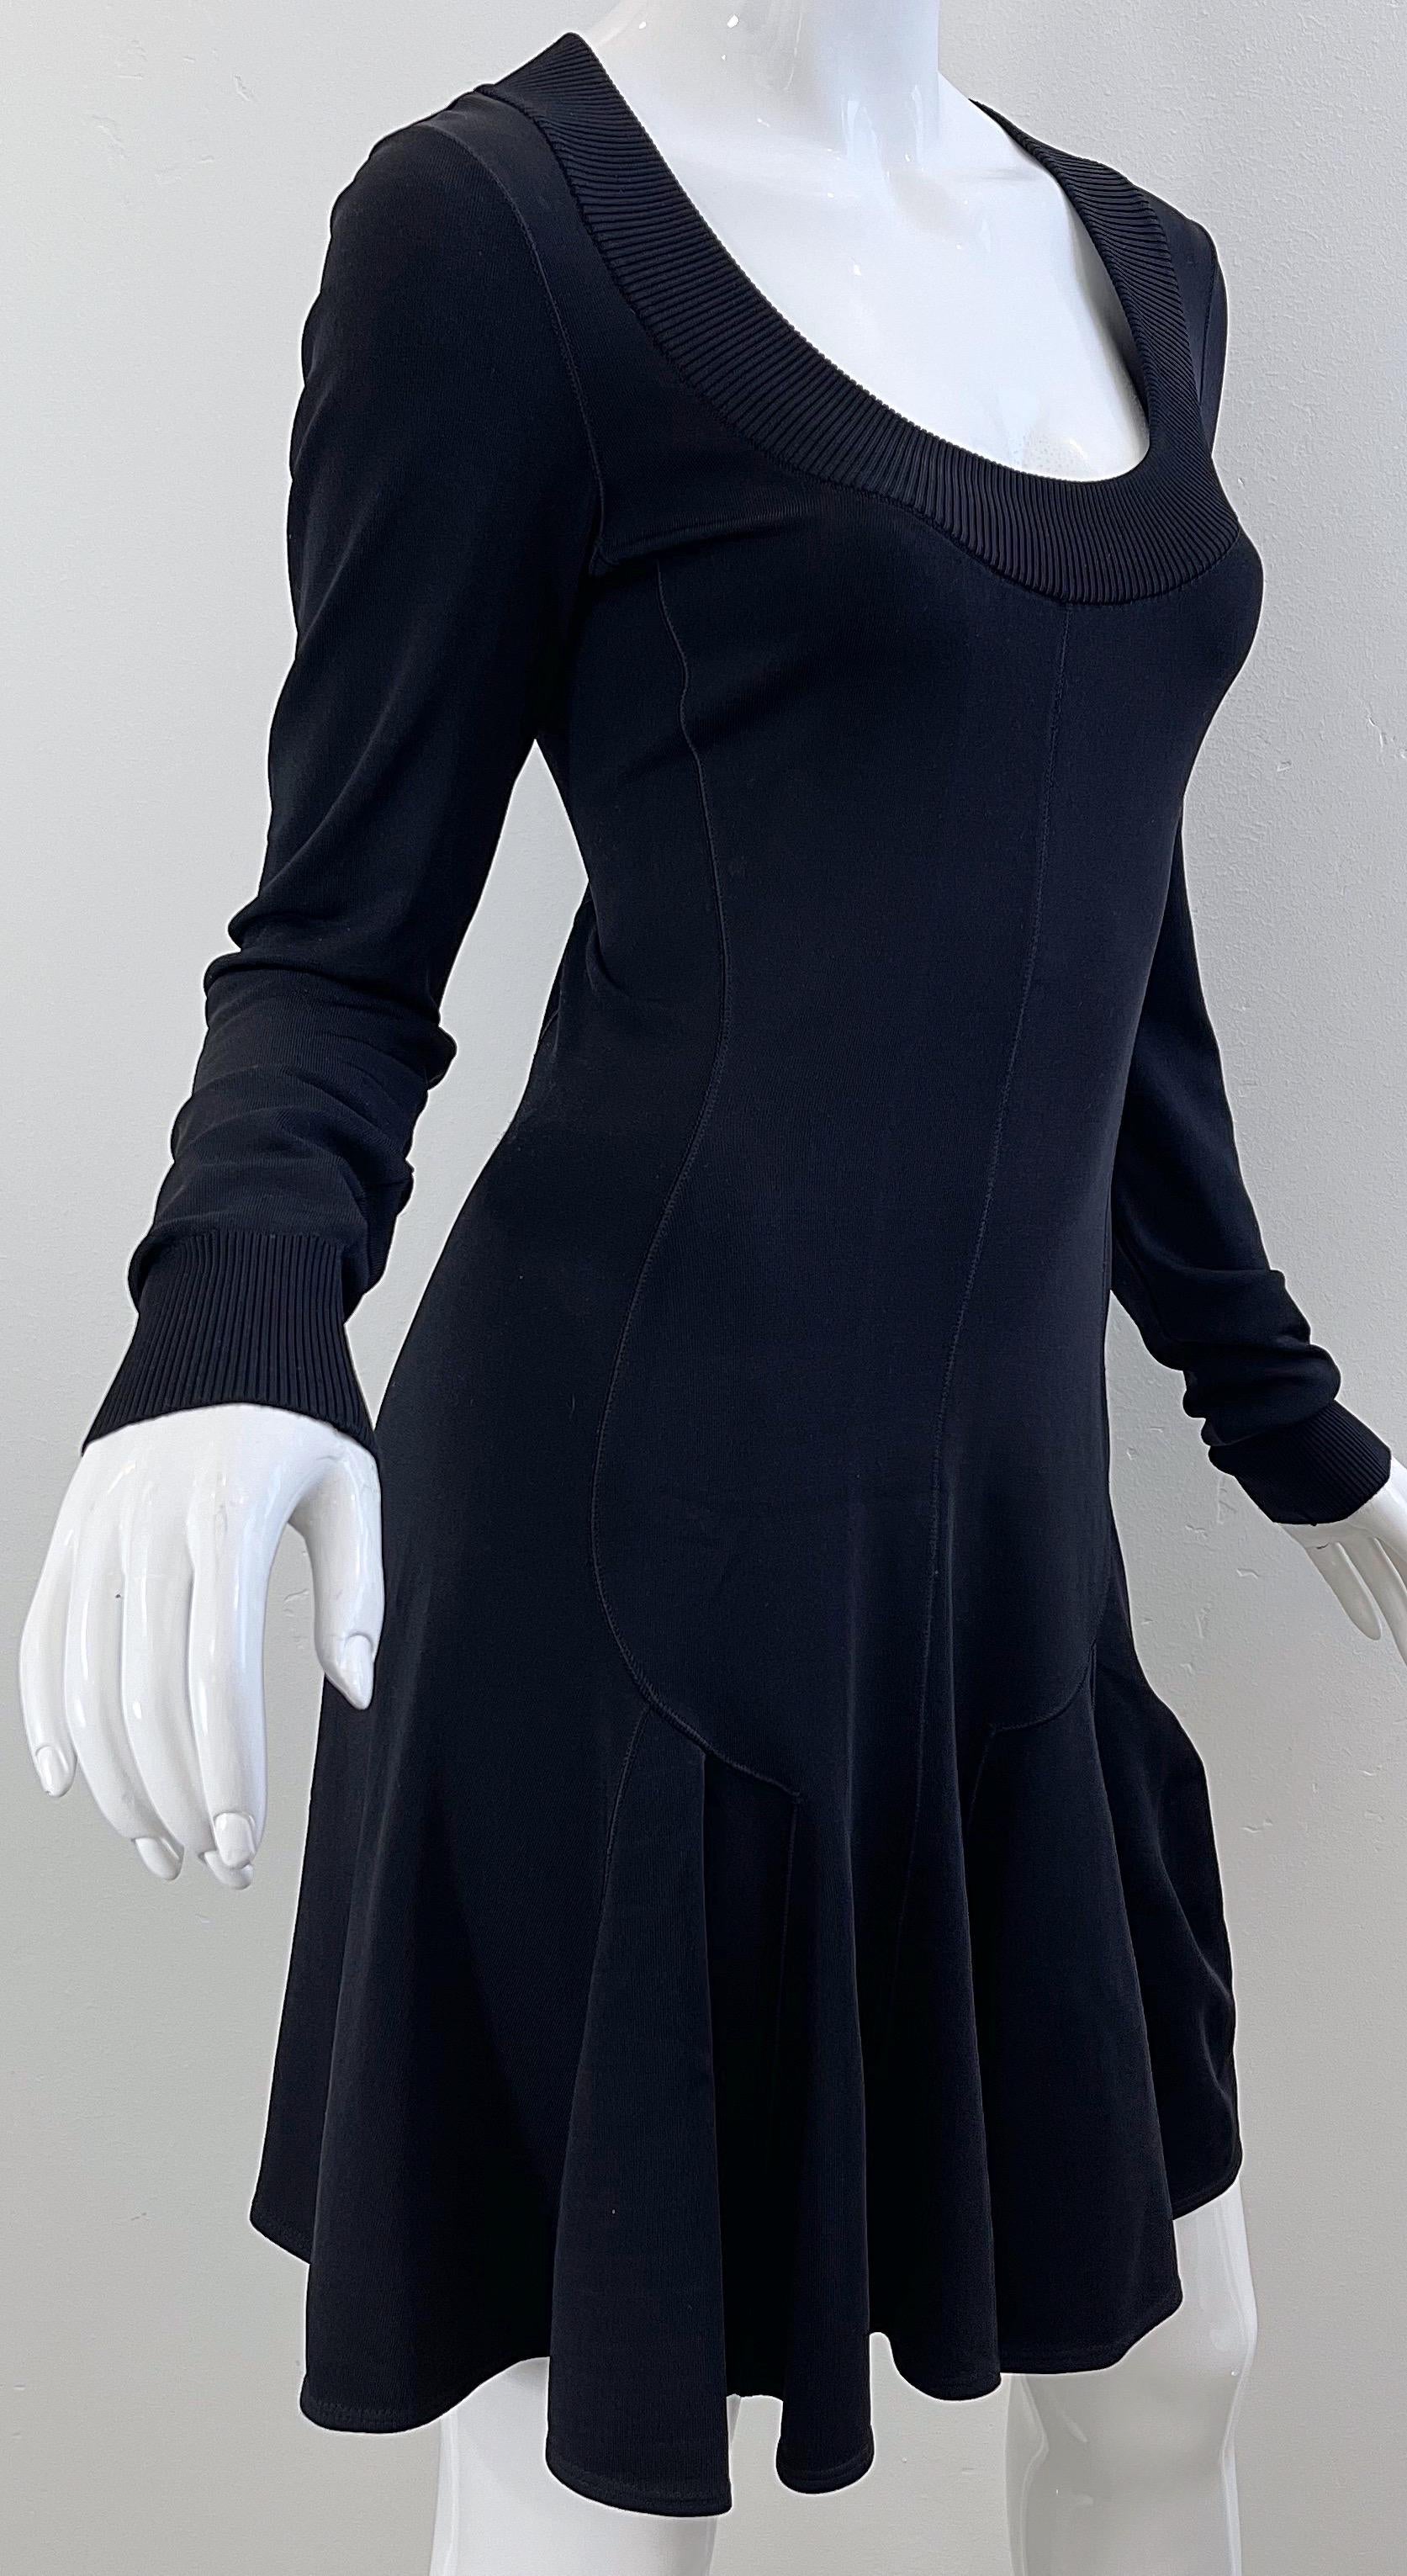 Azzedine Alaia 1990s Black Bodcon Long Sleeve Sz Medium Vintage 90s Skater Dress For Sale 1